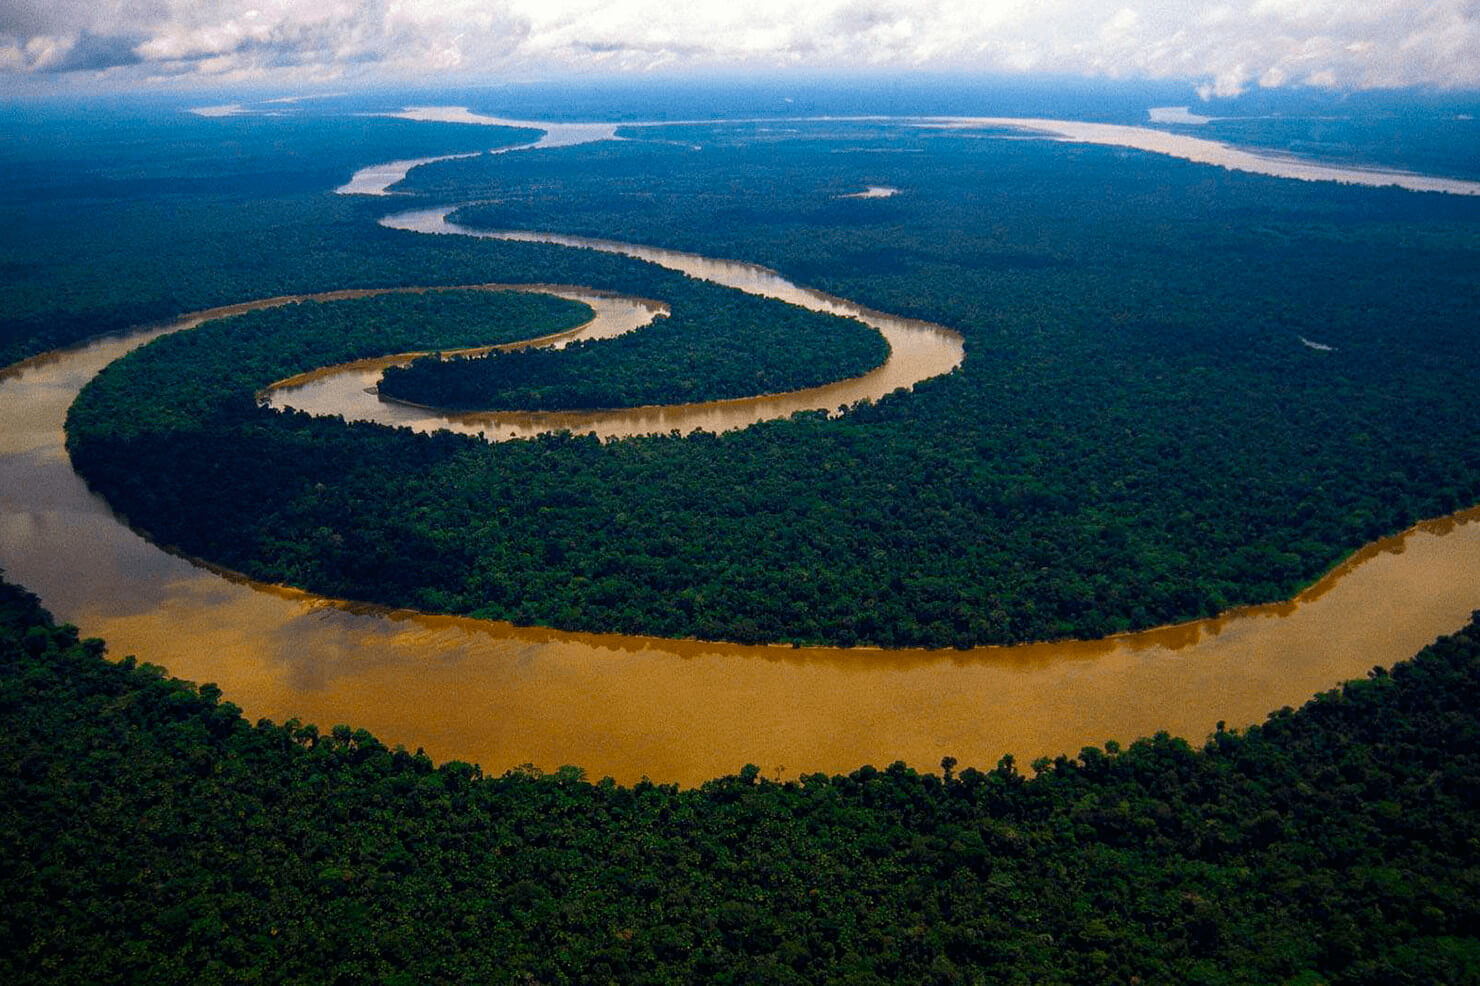 Curving Amazon River